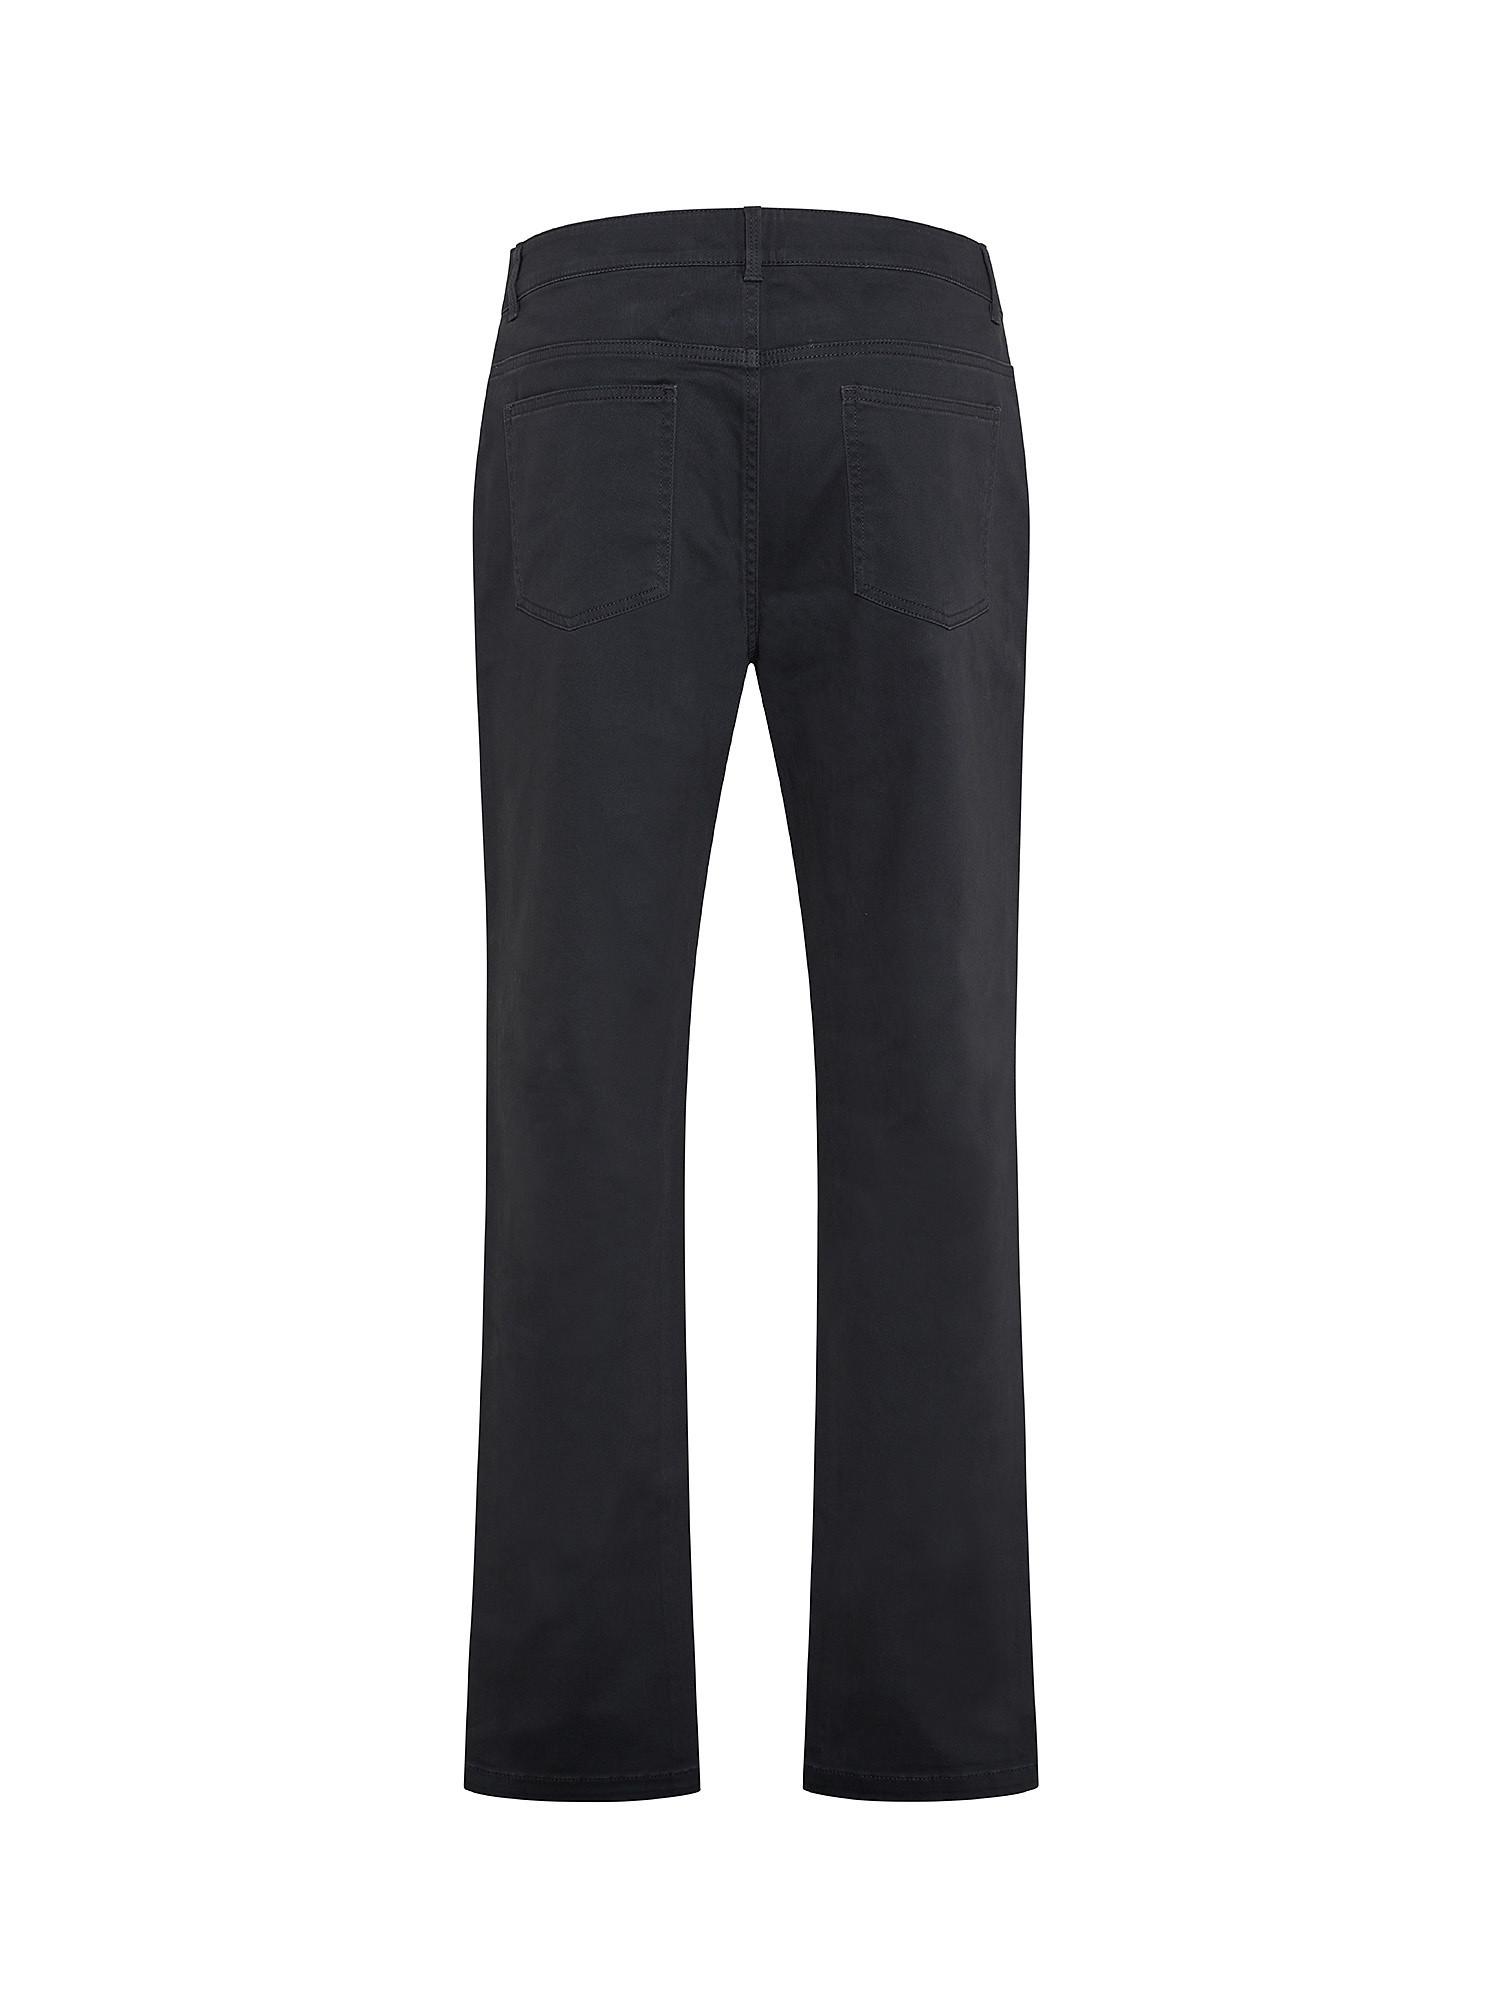 JCT - Five pocket trousers, Dark Blue, large image number 1